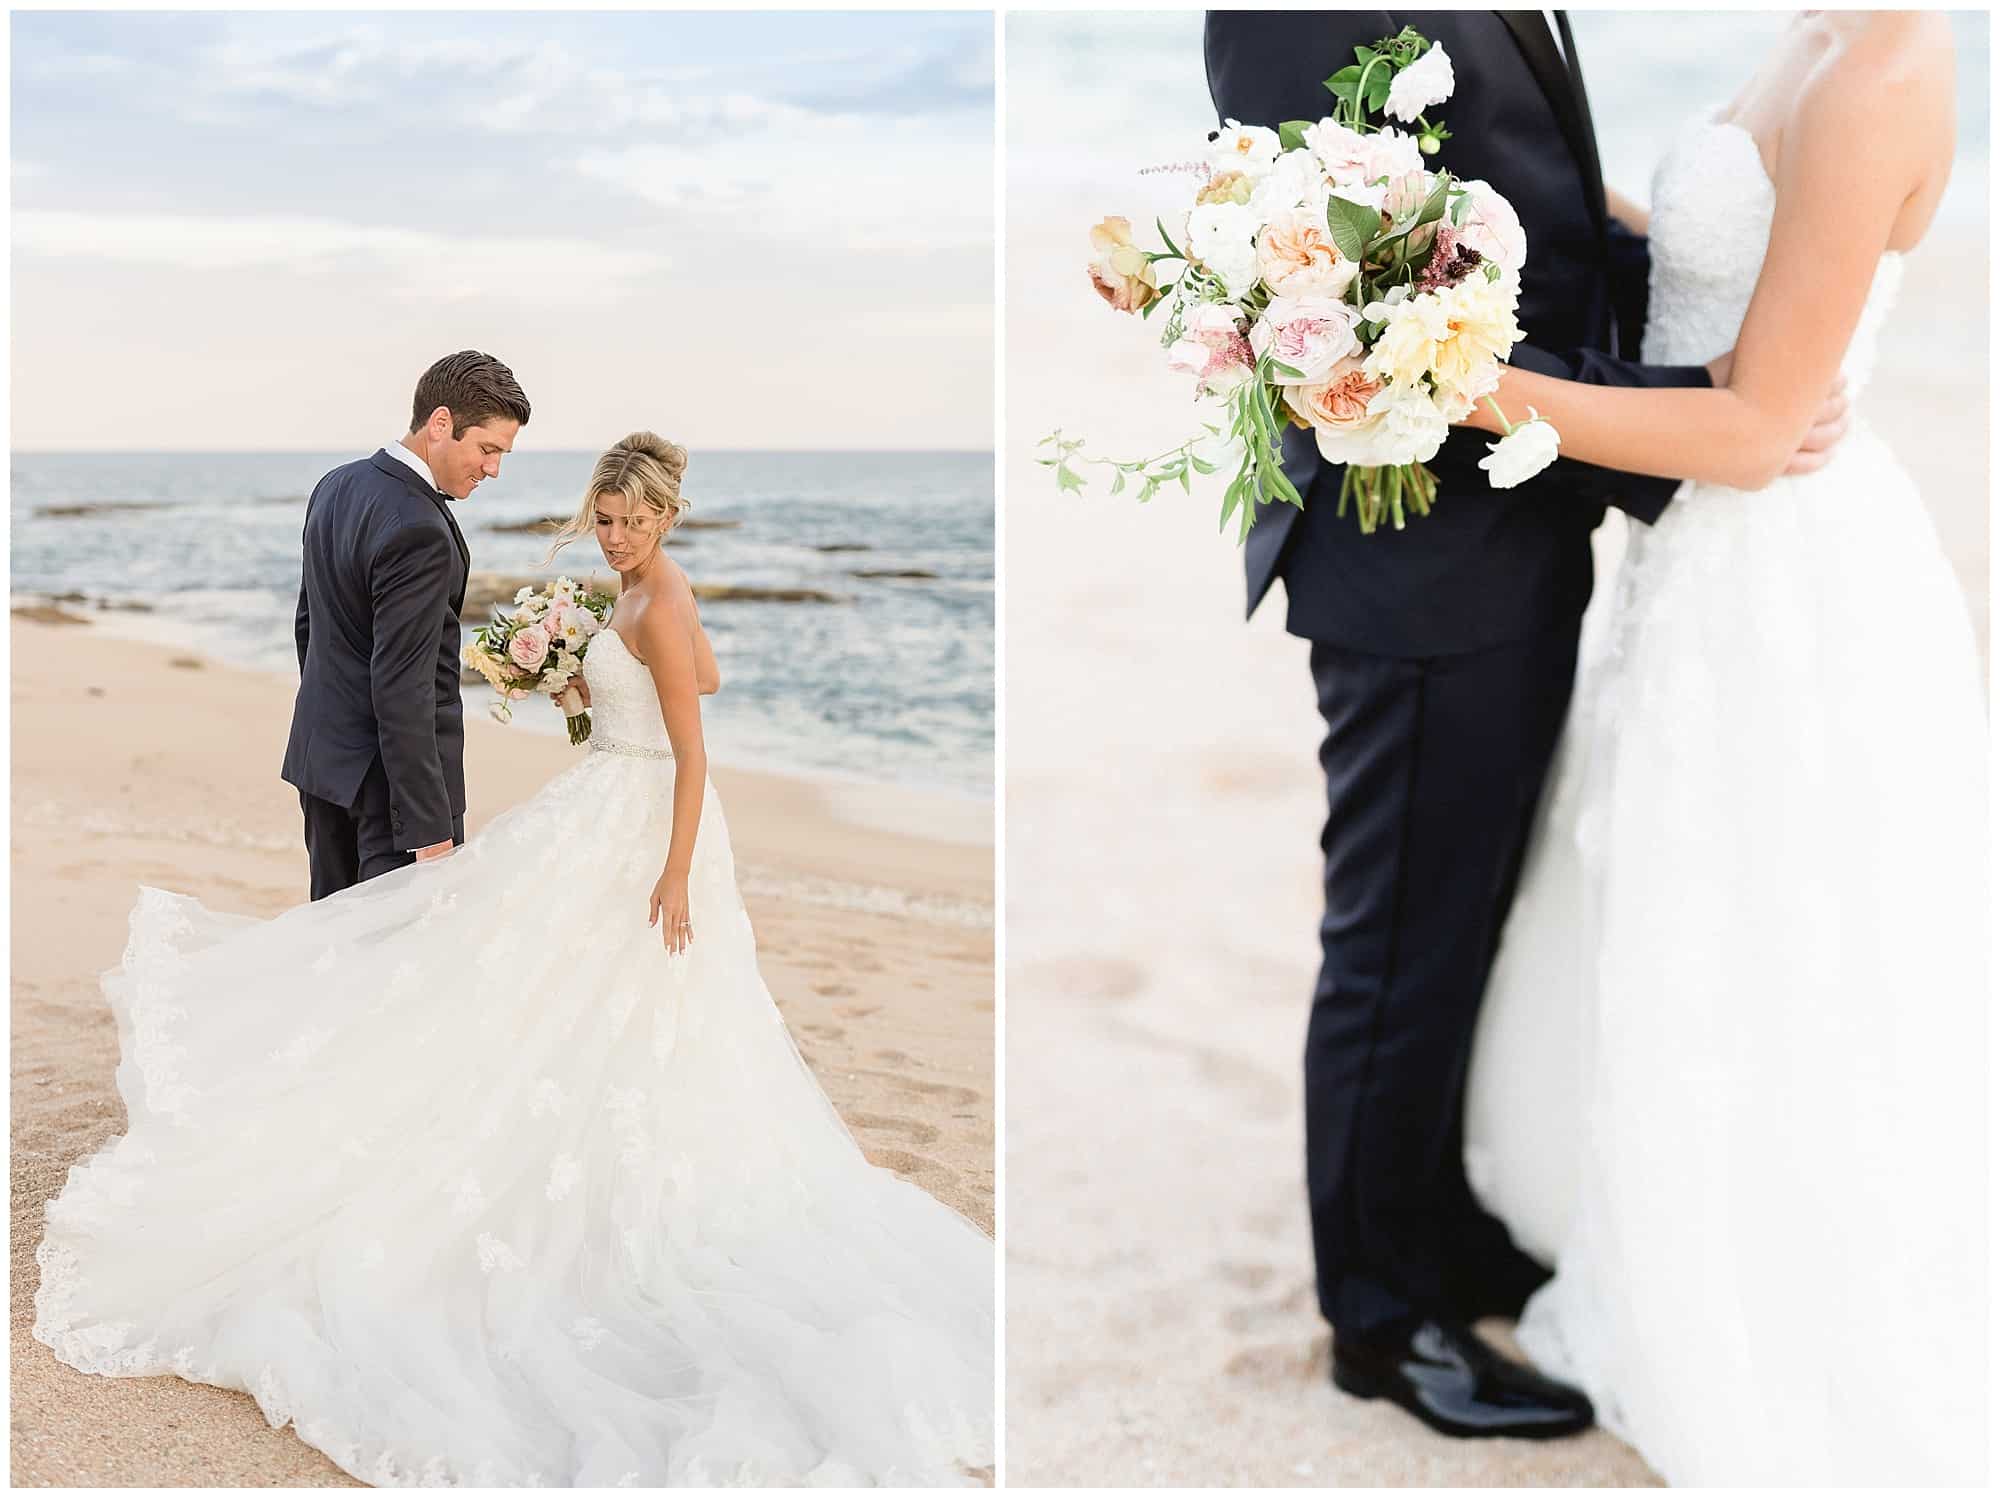 ?pp route=%2Fimage resize&path=%3DcGcq5SN3ADMf9mblxWaoN0Xu92ckJXYoNWaS9VYyF2UfJXZoBXYyd2b09GaQ91ZulGZkV2df9mYhN0L0N3bw1CN2UTNtYTMvIDMvgTMwIjf&width=768 - Janelle & Rob's stunning beach wedding at Chileno Bay